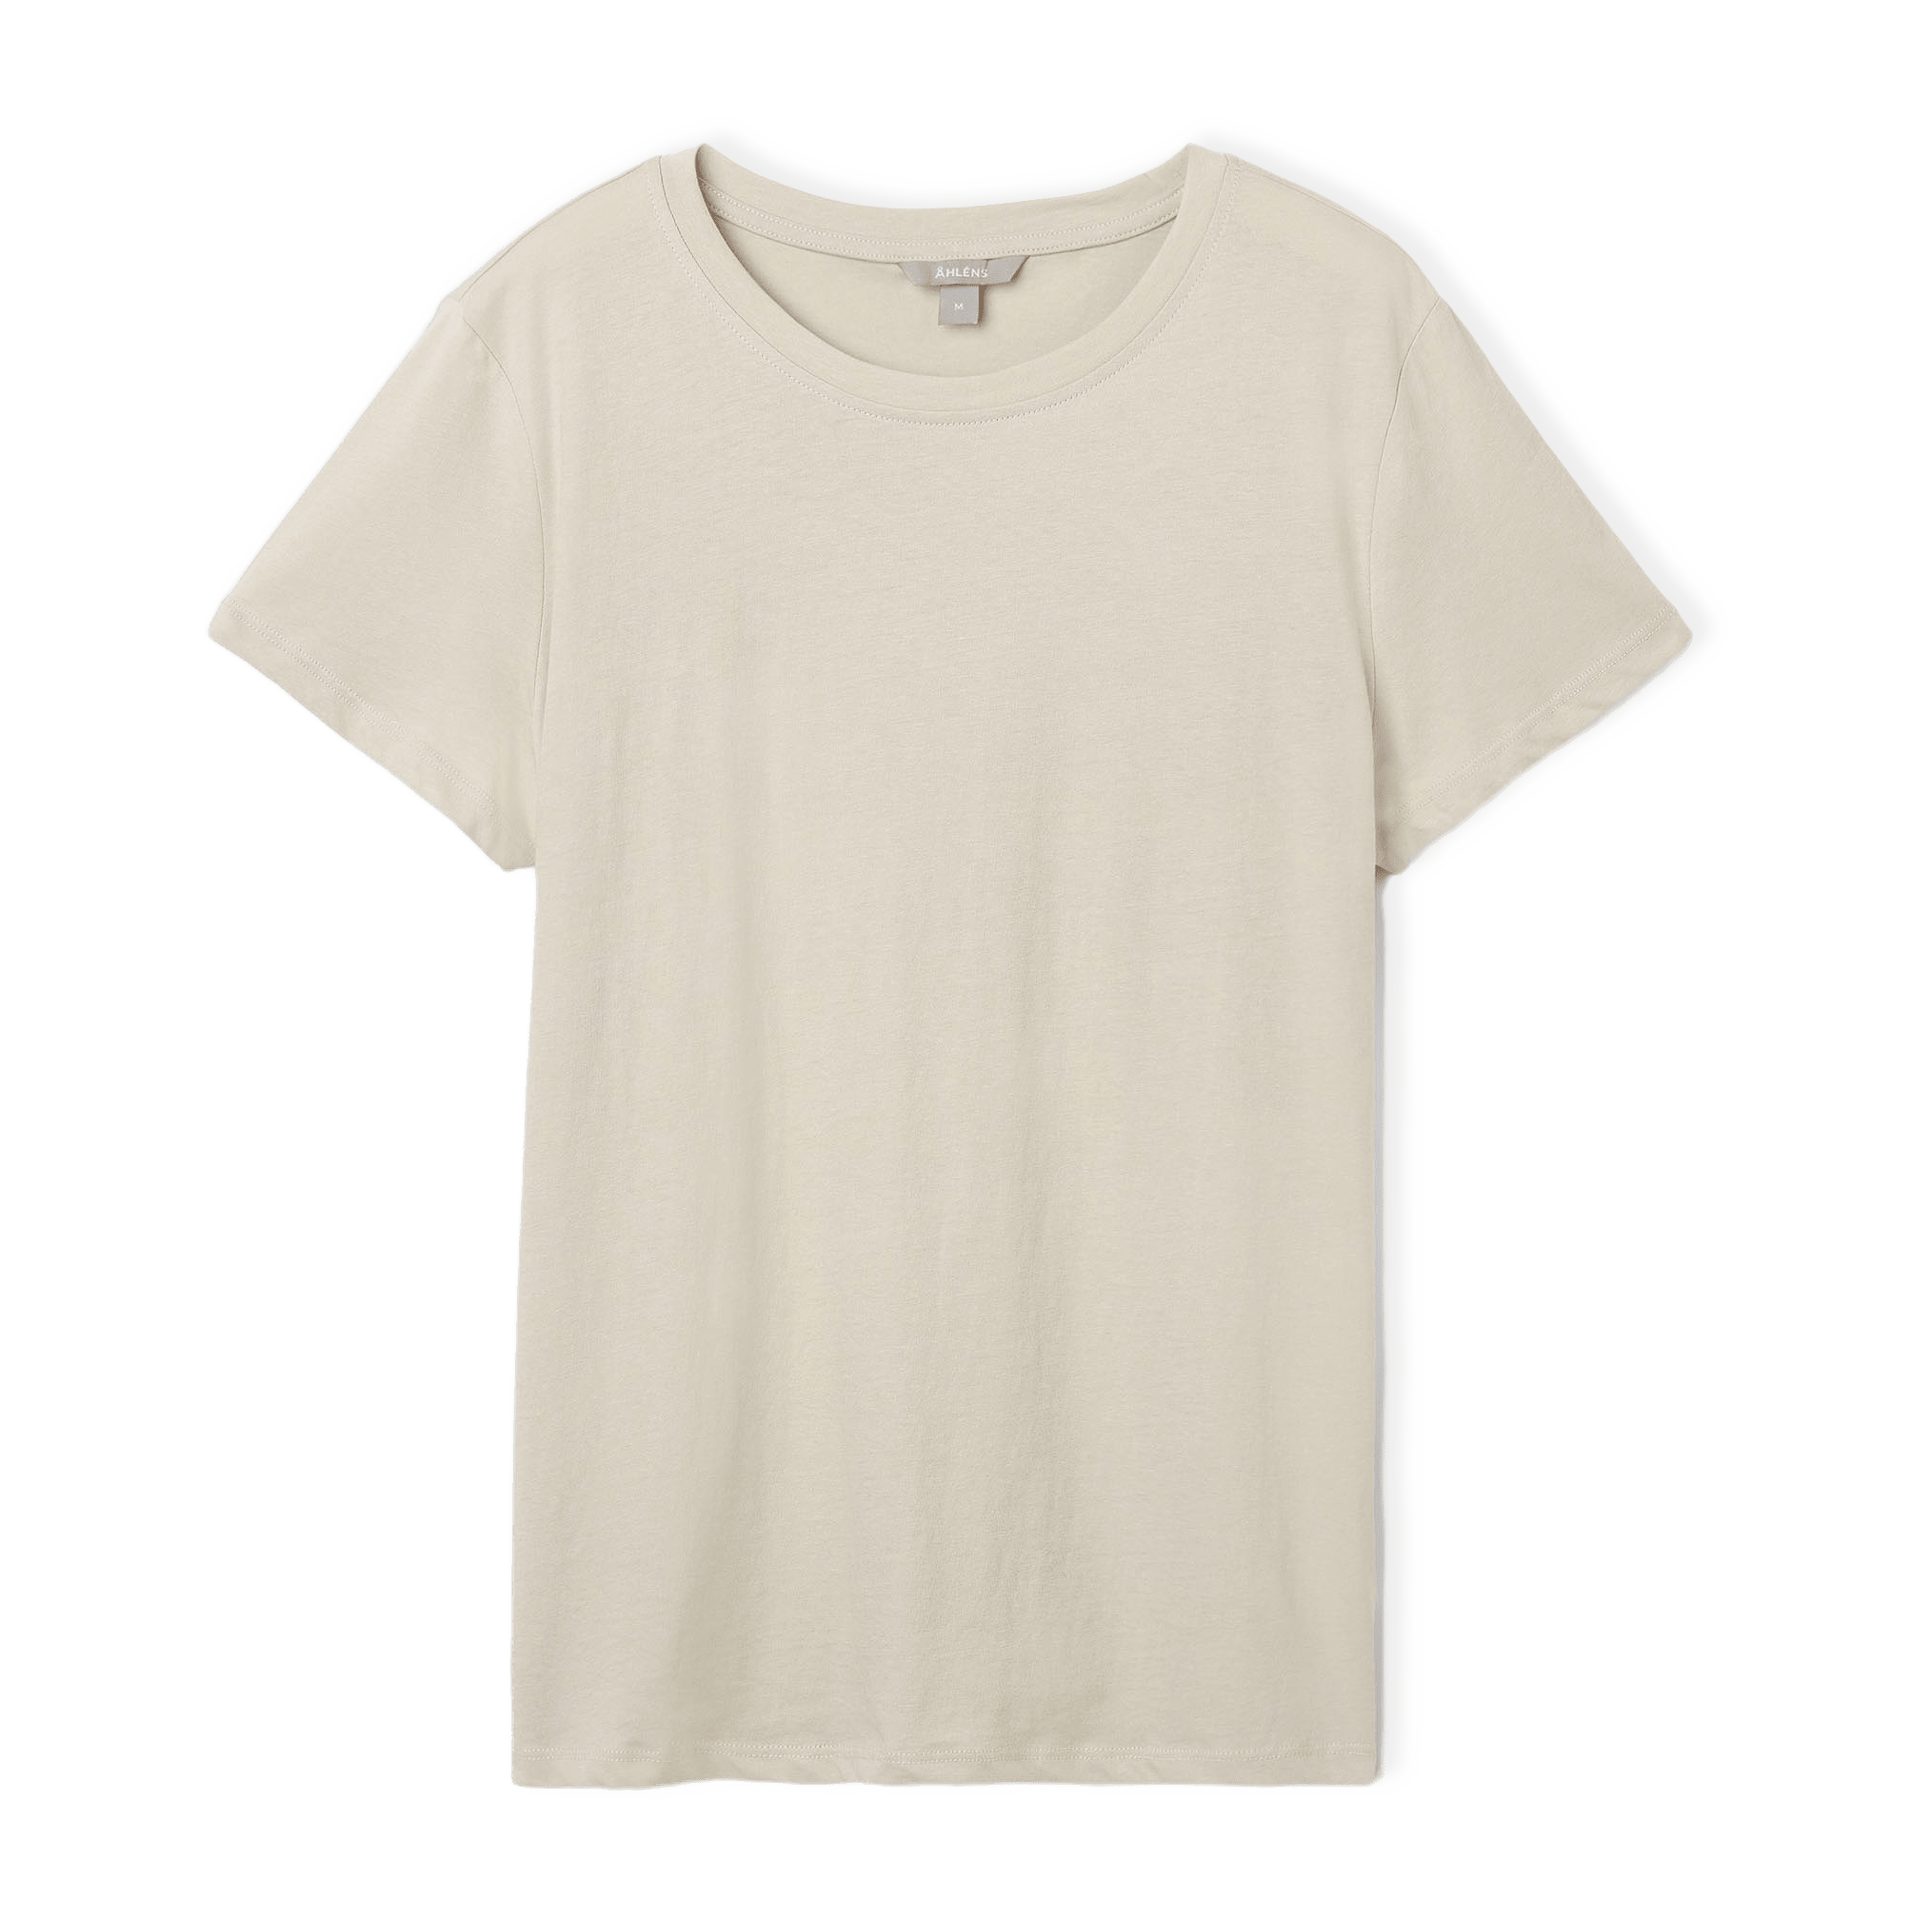 T-shirt i ekologisk bomull ANNA från Åhléns